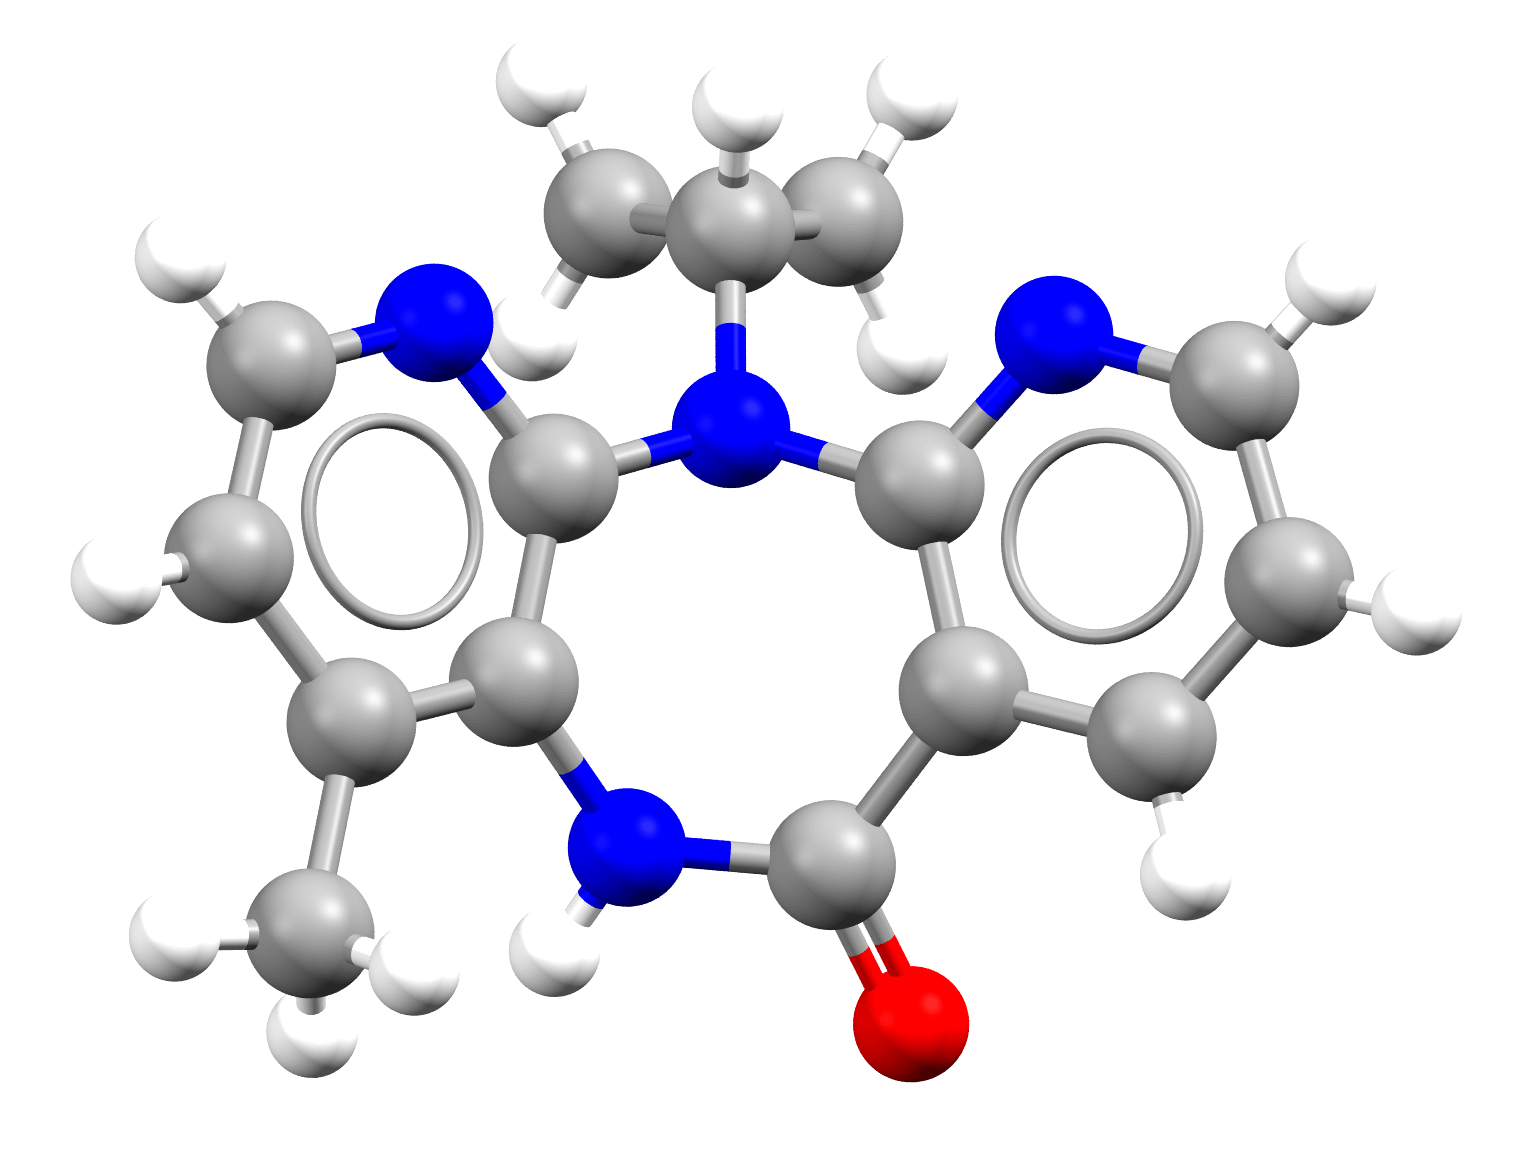 Ball and stick representation of the Nevirapine molecule, refocde PABHJ01